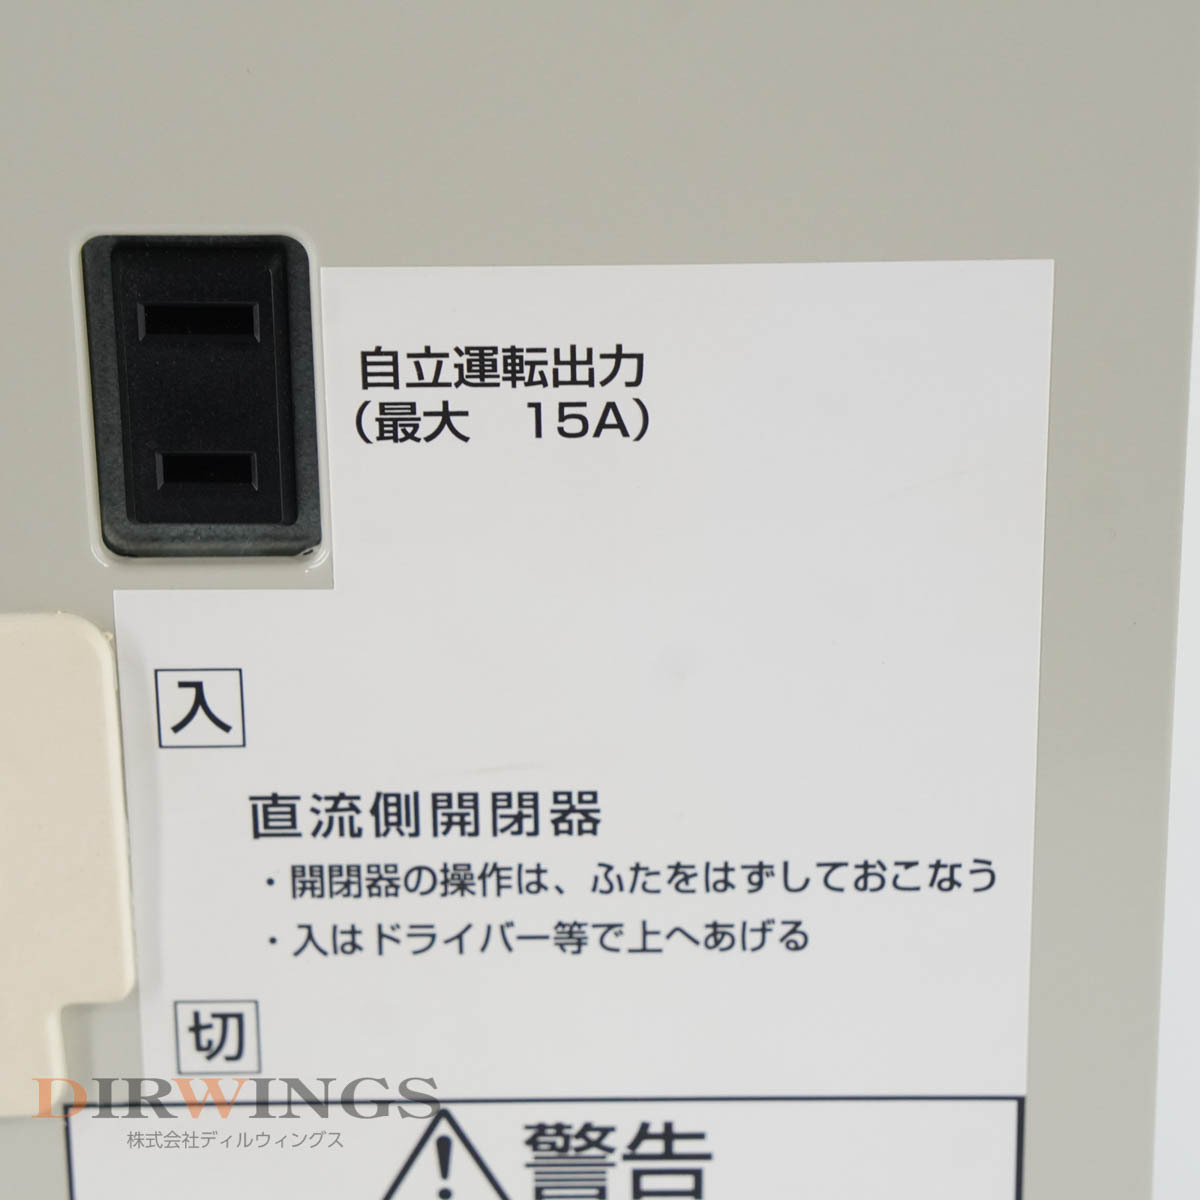 [PG] 8 day guarantee PV-PN30G DIAMONDSOLAR MITSUBISHI Mitsubishi Electric sun light departure electro- system power conditioner power navy blue [05944-0020]